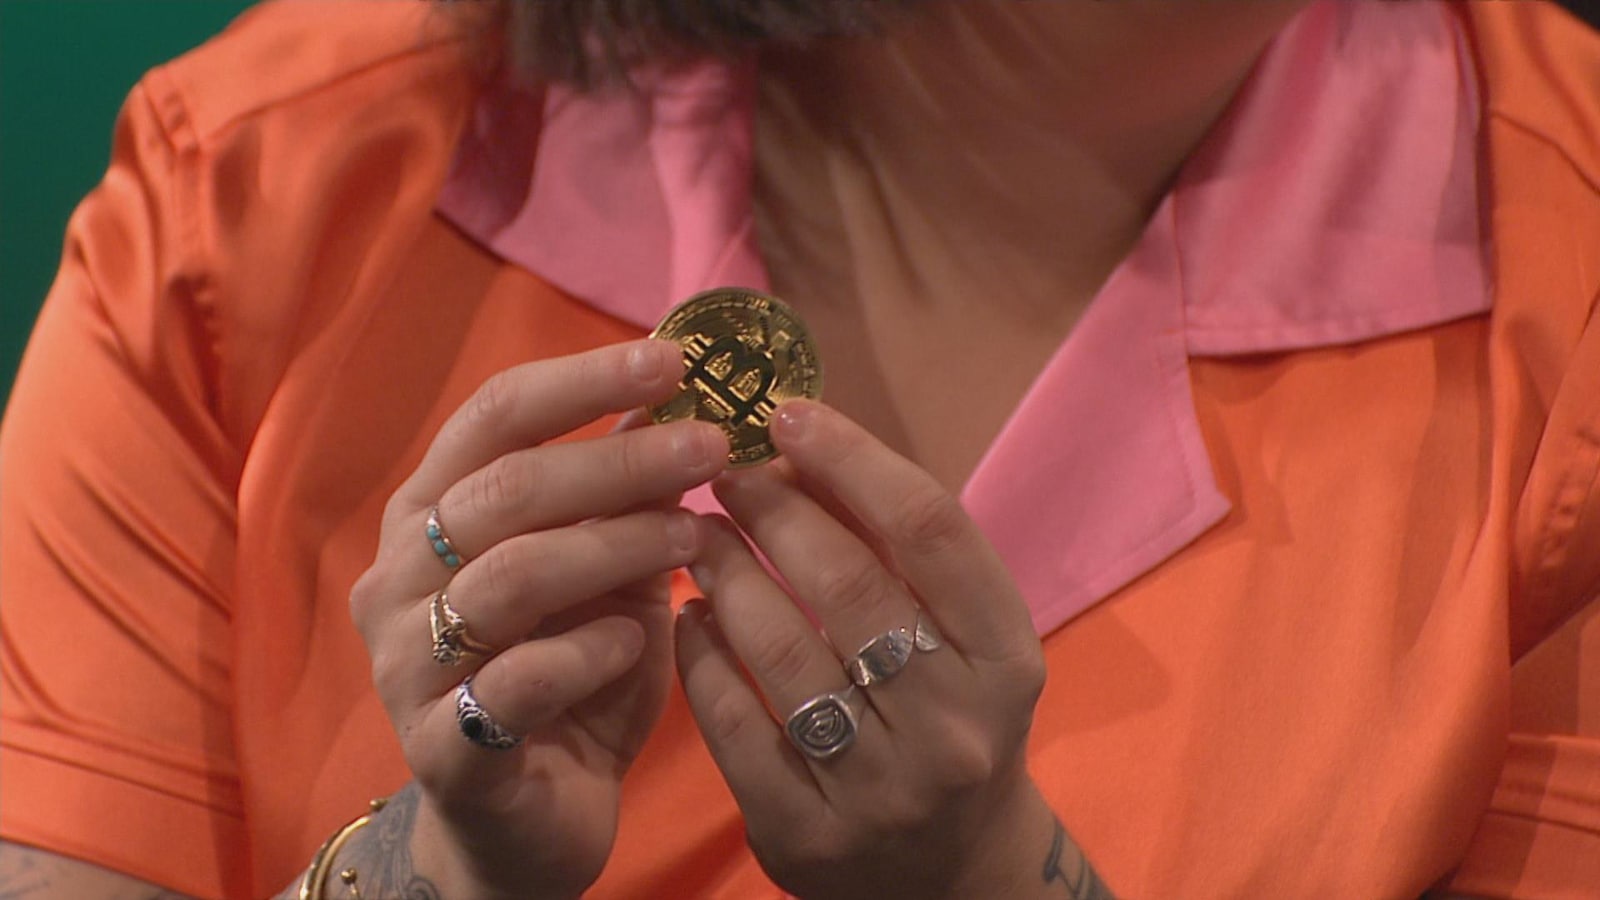 Mariana Mazza tient une pièce représentant un bitcoin dans les mains.